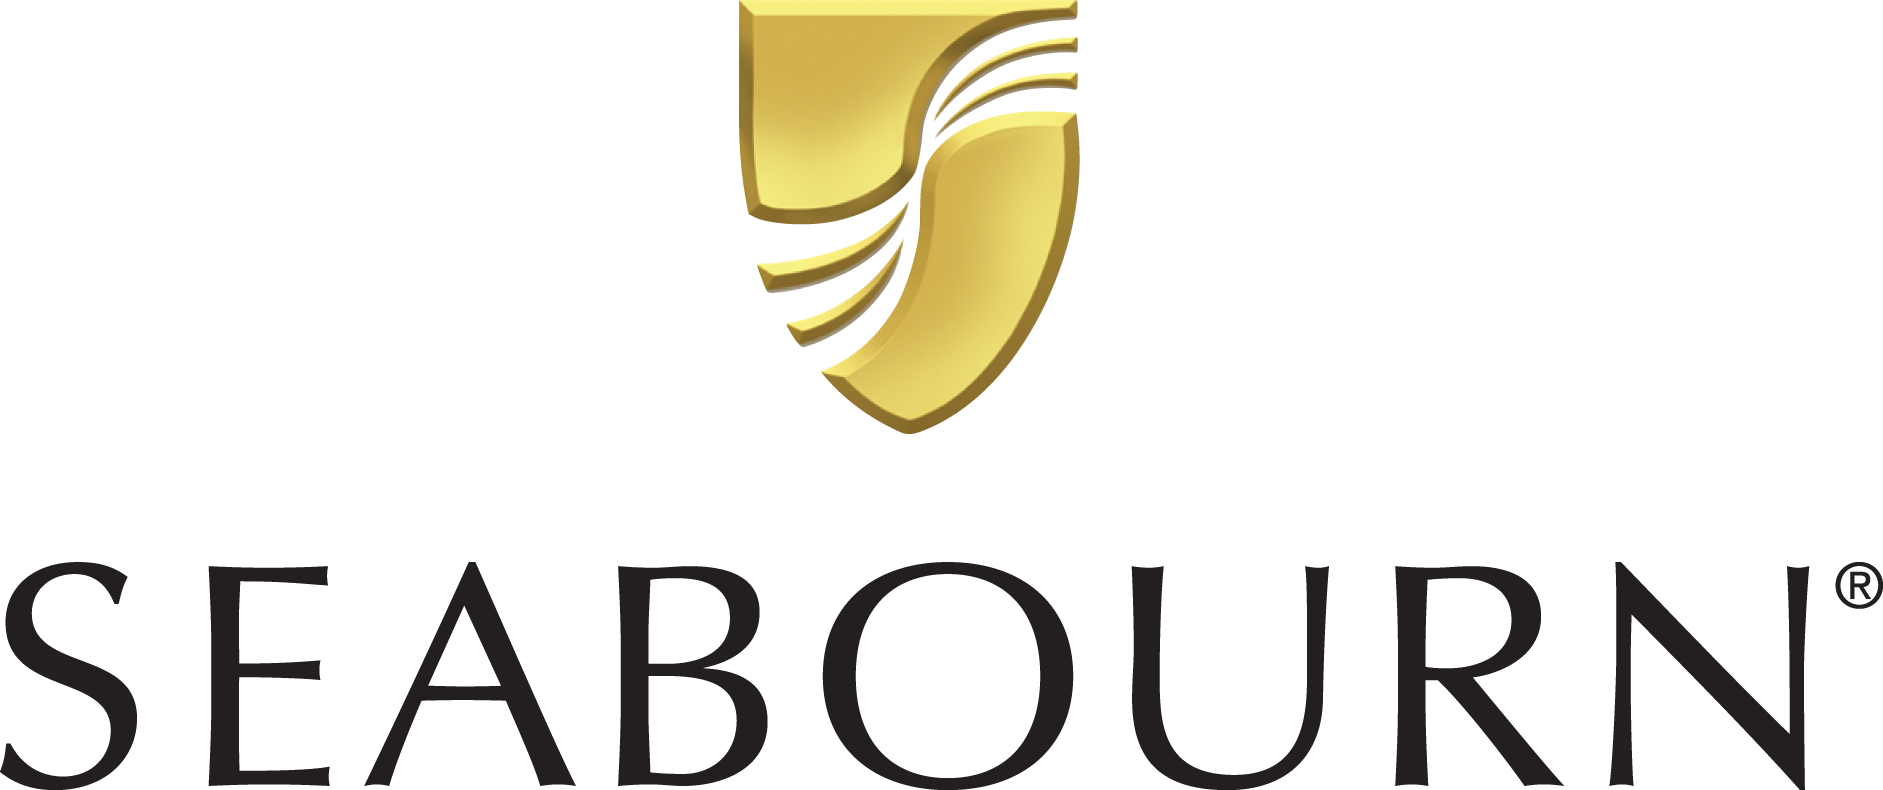 Seabourn Ovation Reederei Logo